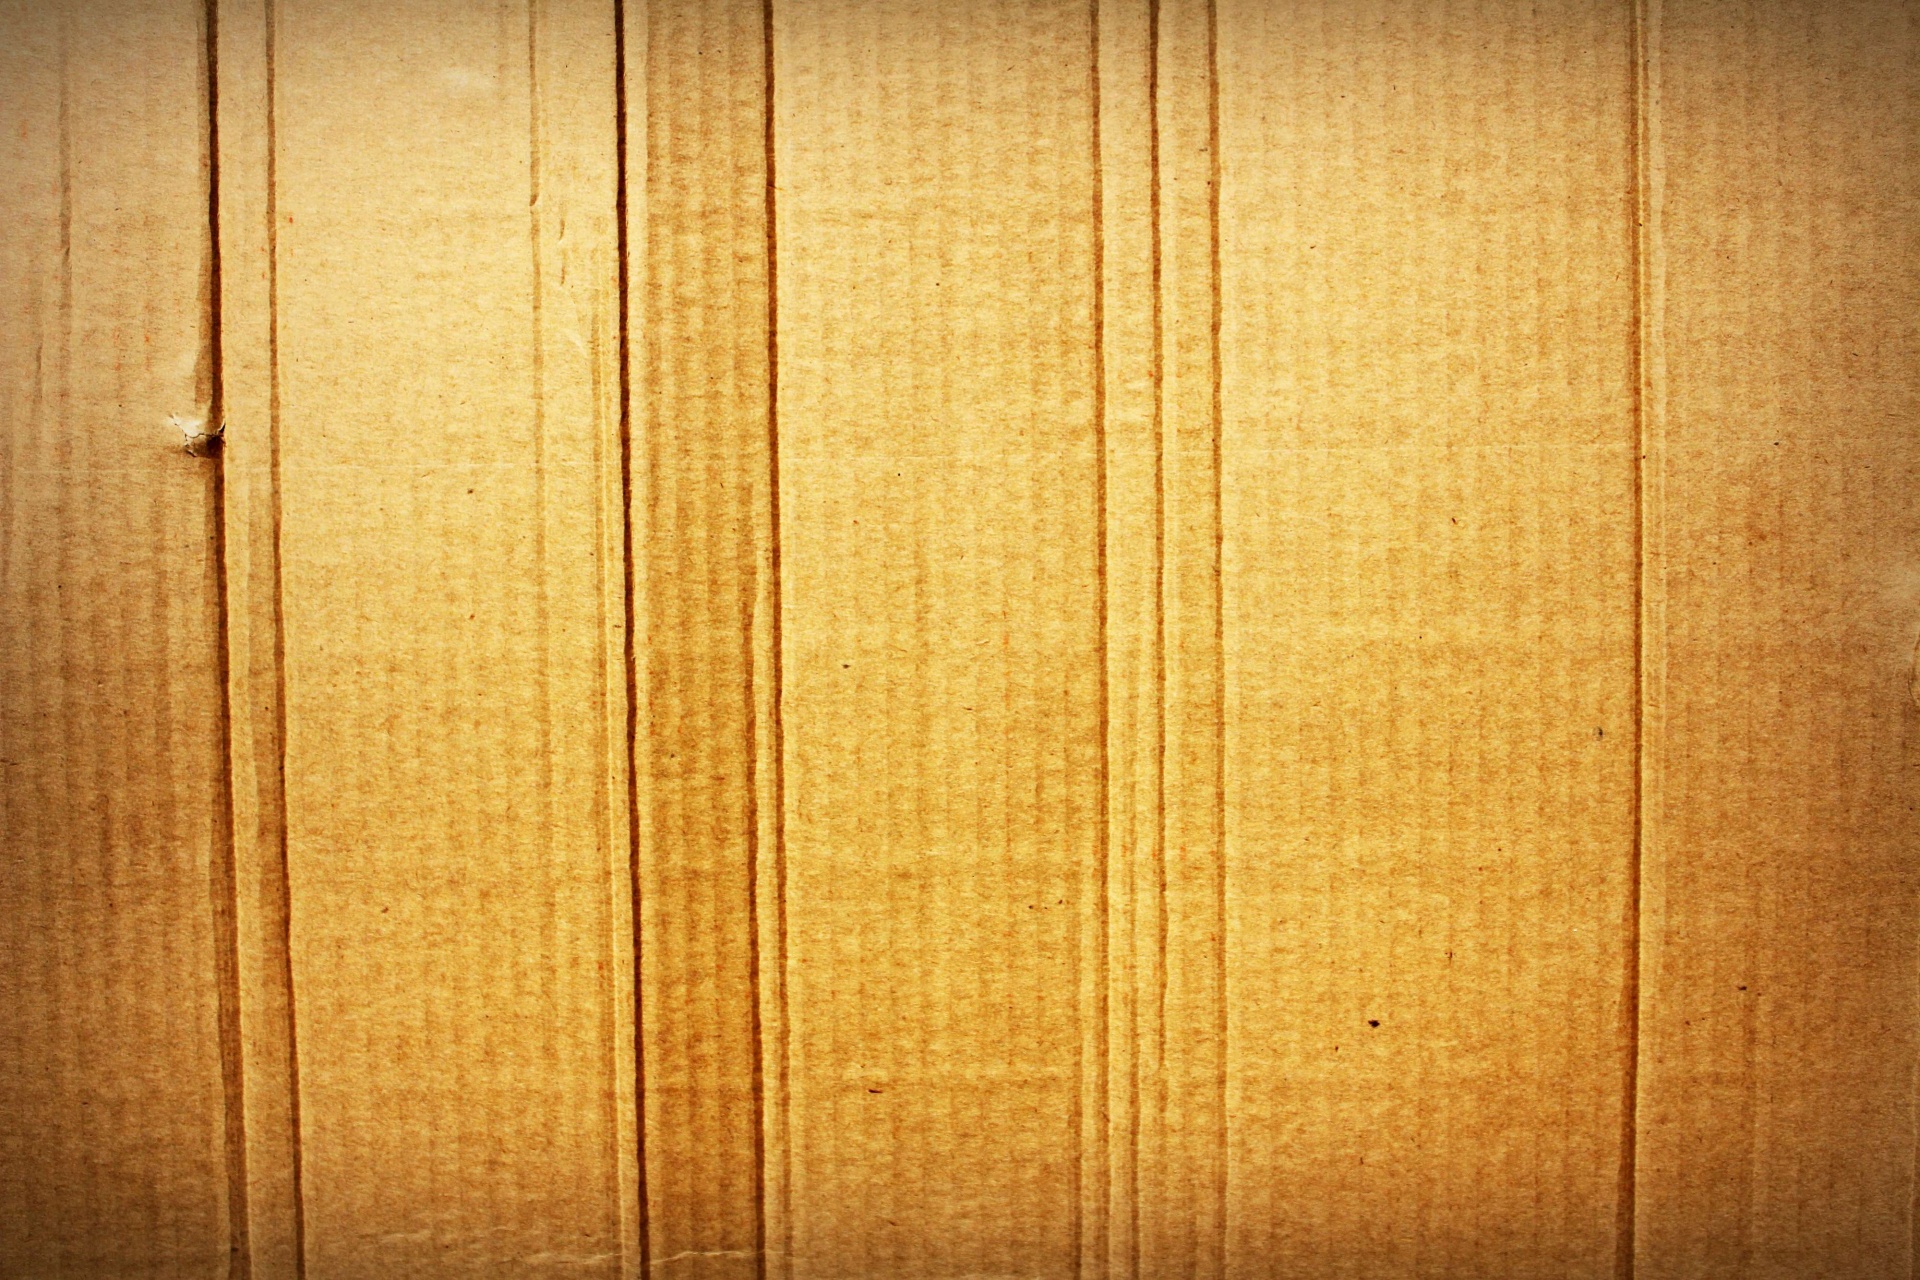 Paper Box kartonnen textuur